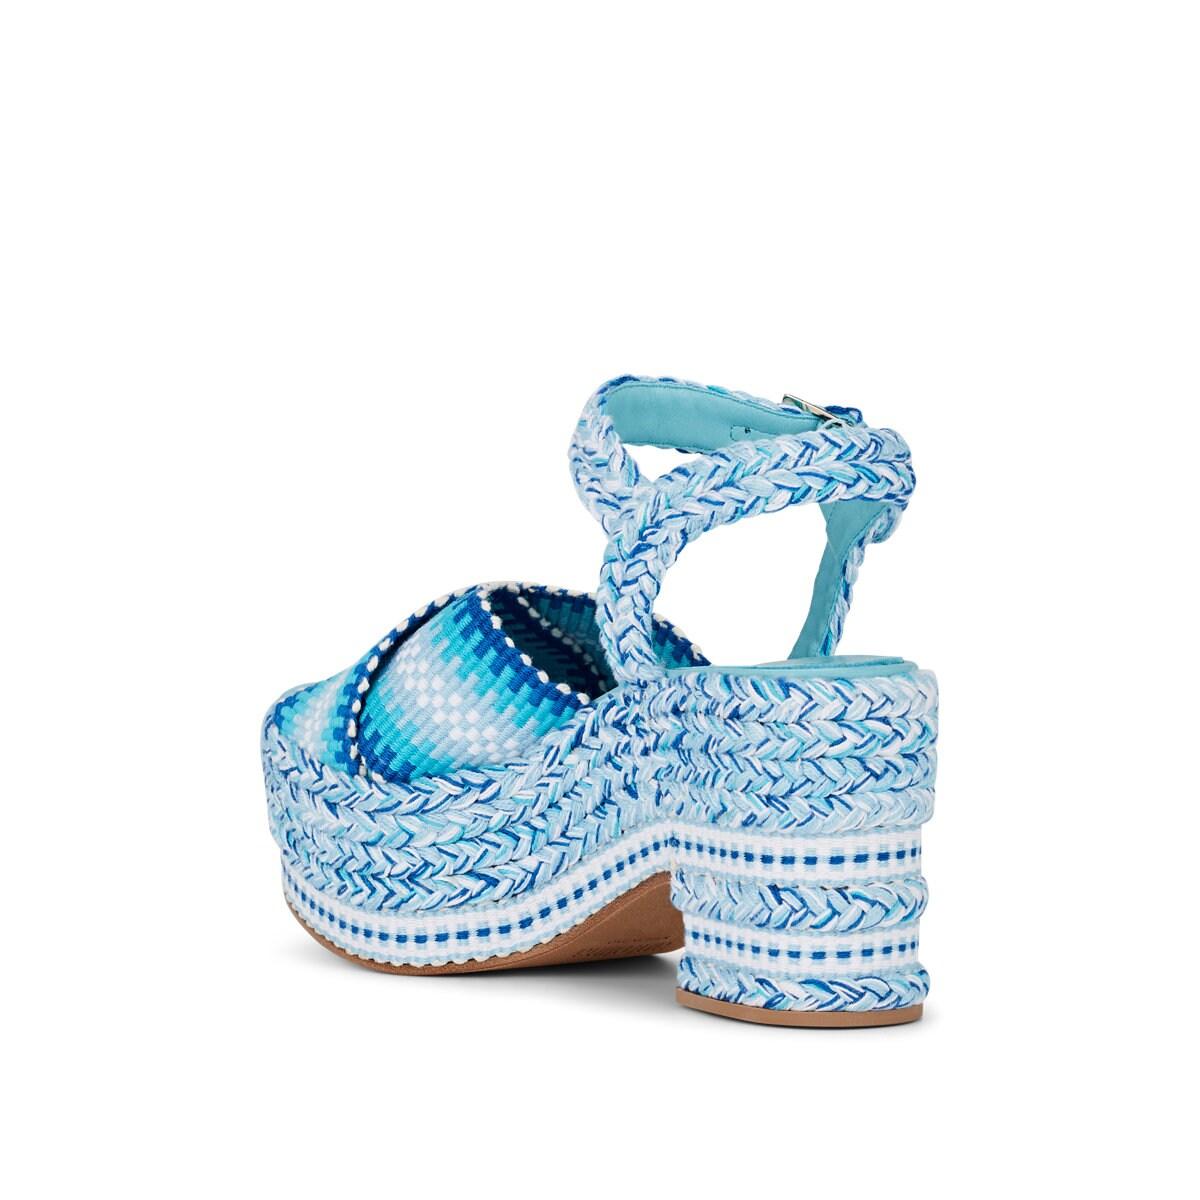 ANTOLINA PARIS Brenda Cotton Platform Sandals in Blue - Lyst